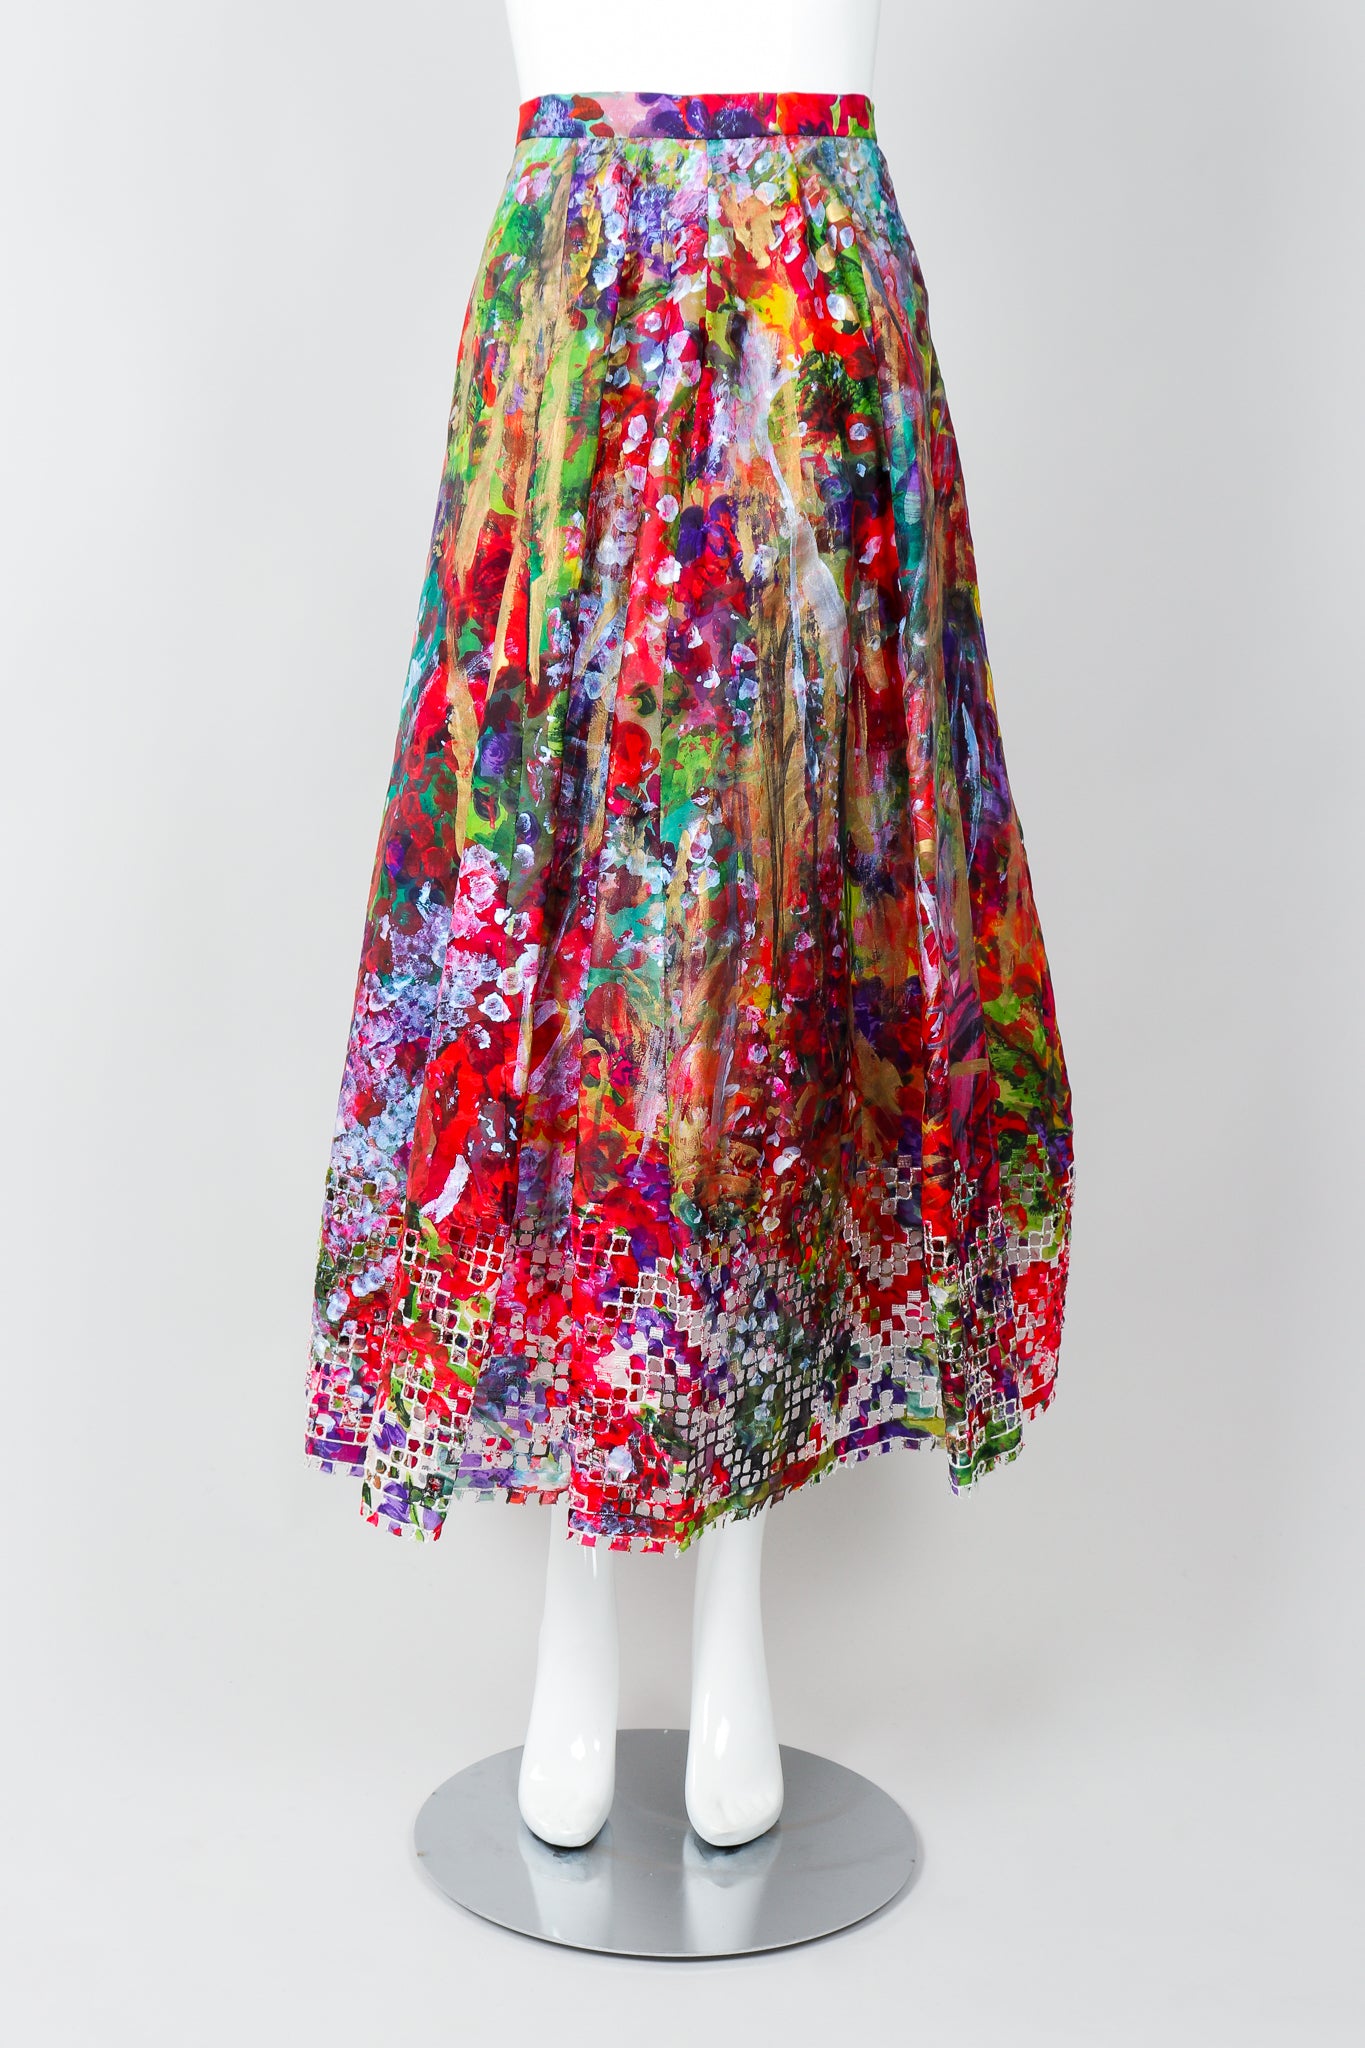 Vintage Oscar de la Renta Painted Impressionist Midi Skirt on Mannequin, Front at Recess